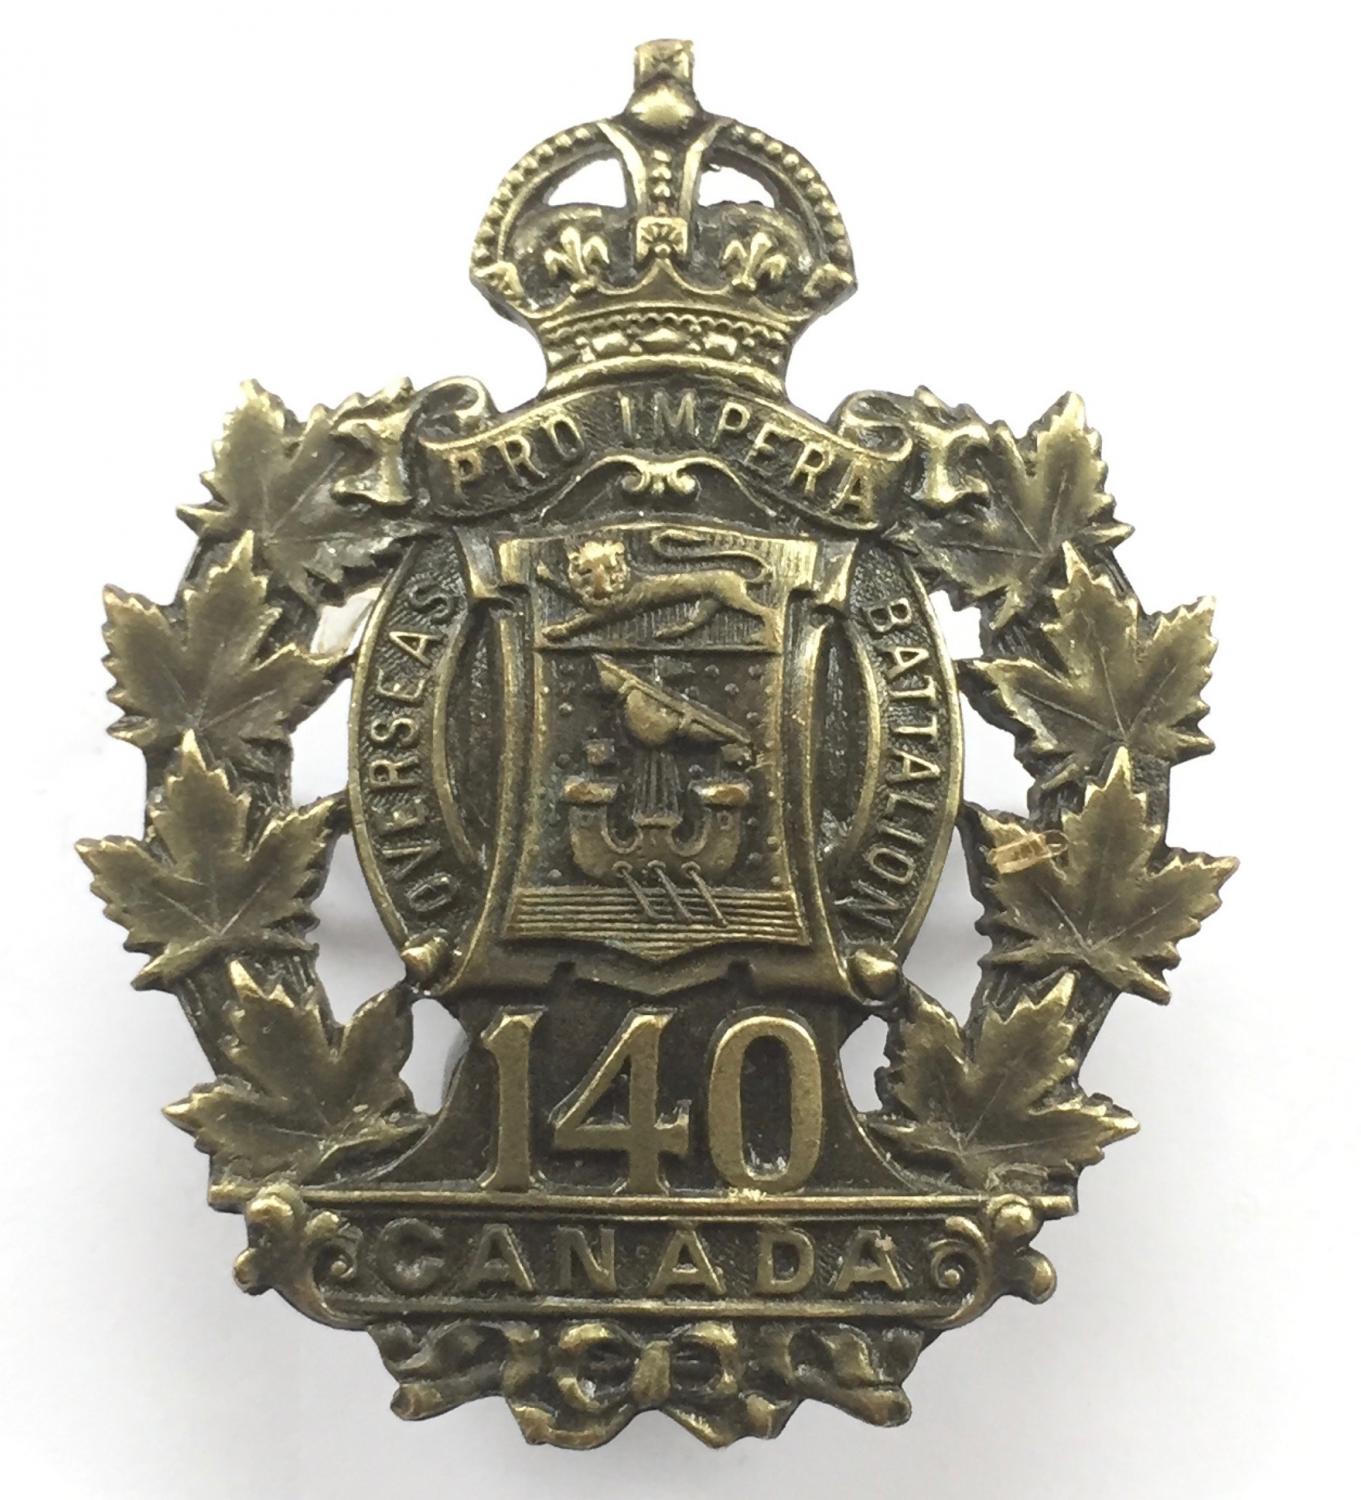 Canadian 140th (St Johns, New Brunswick) CEF cap badge